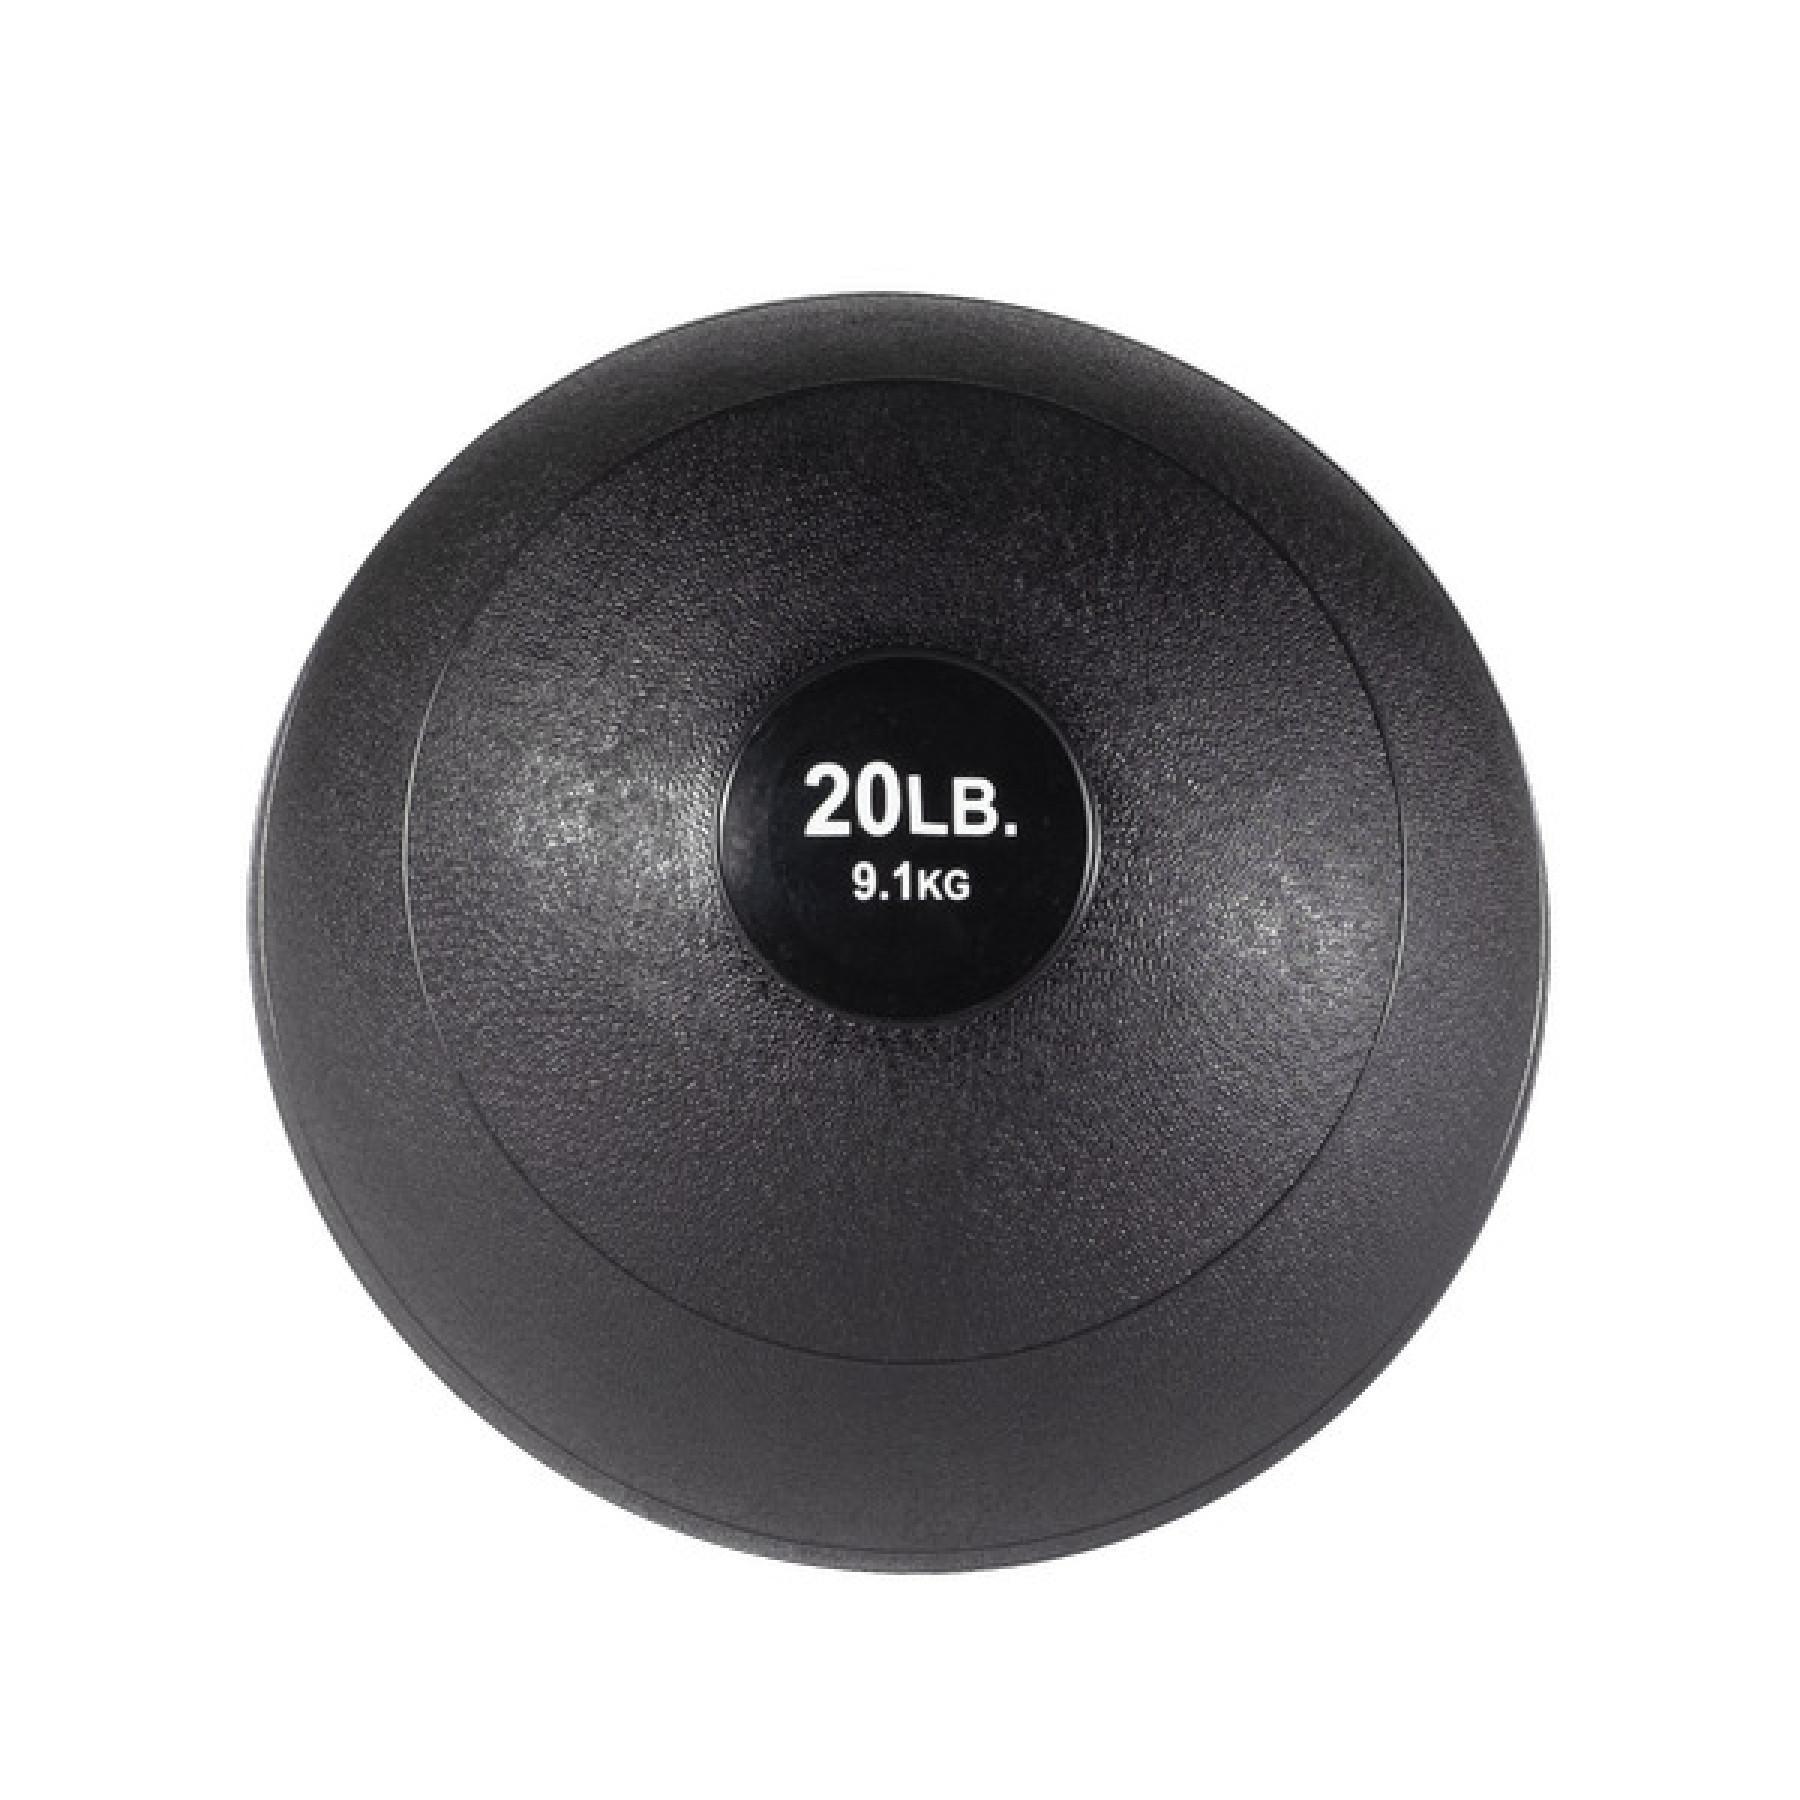 Slam ball 25 lb - 11.3 kg Body Solid